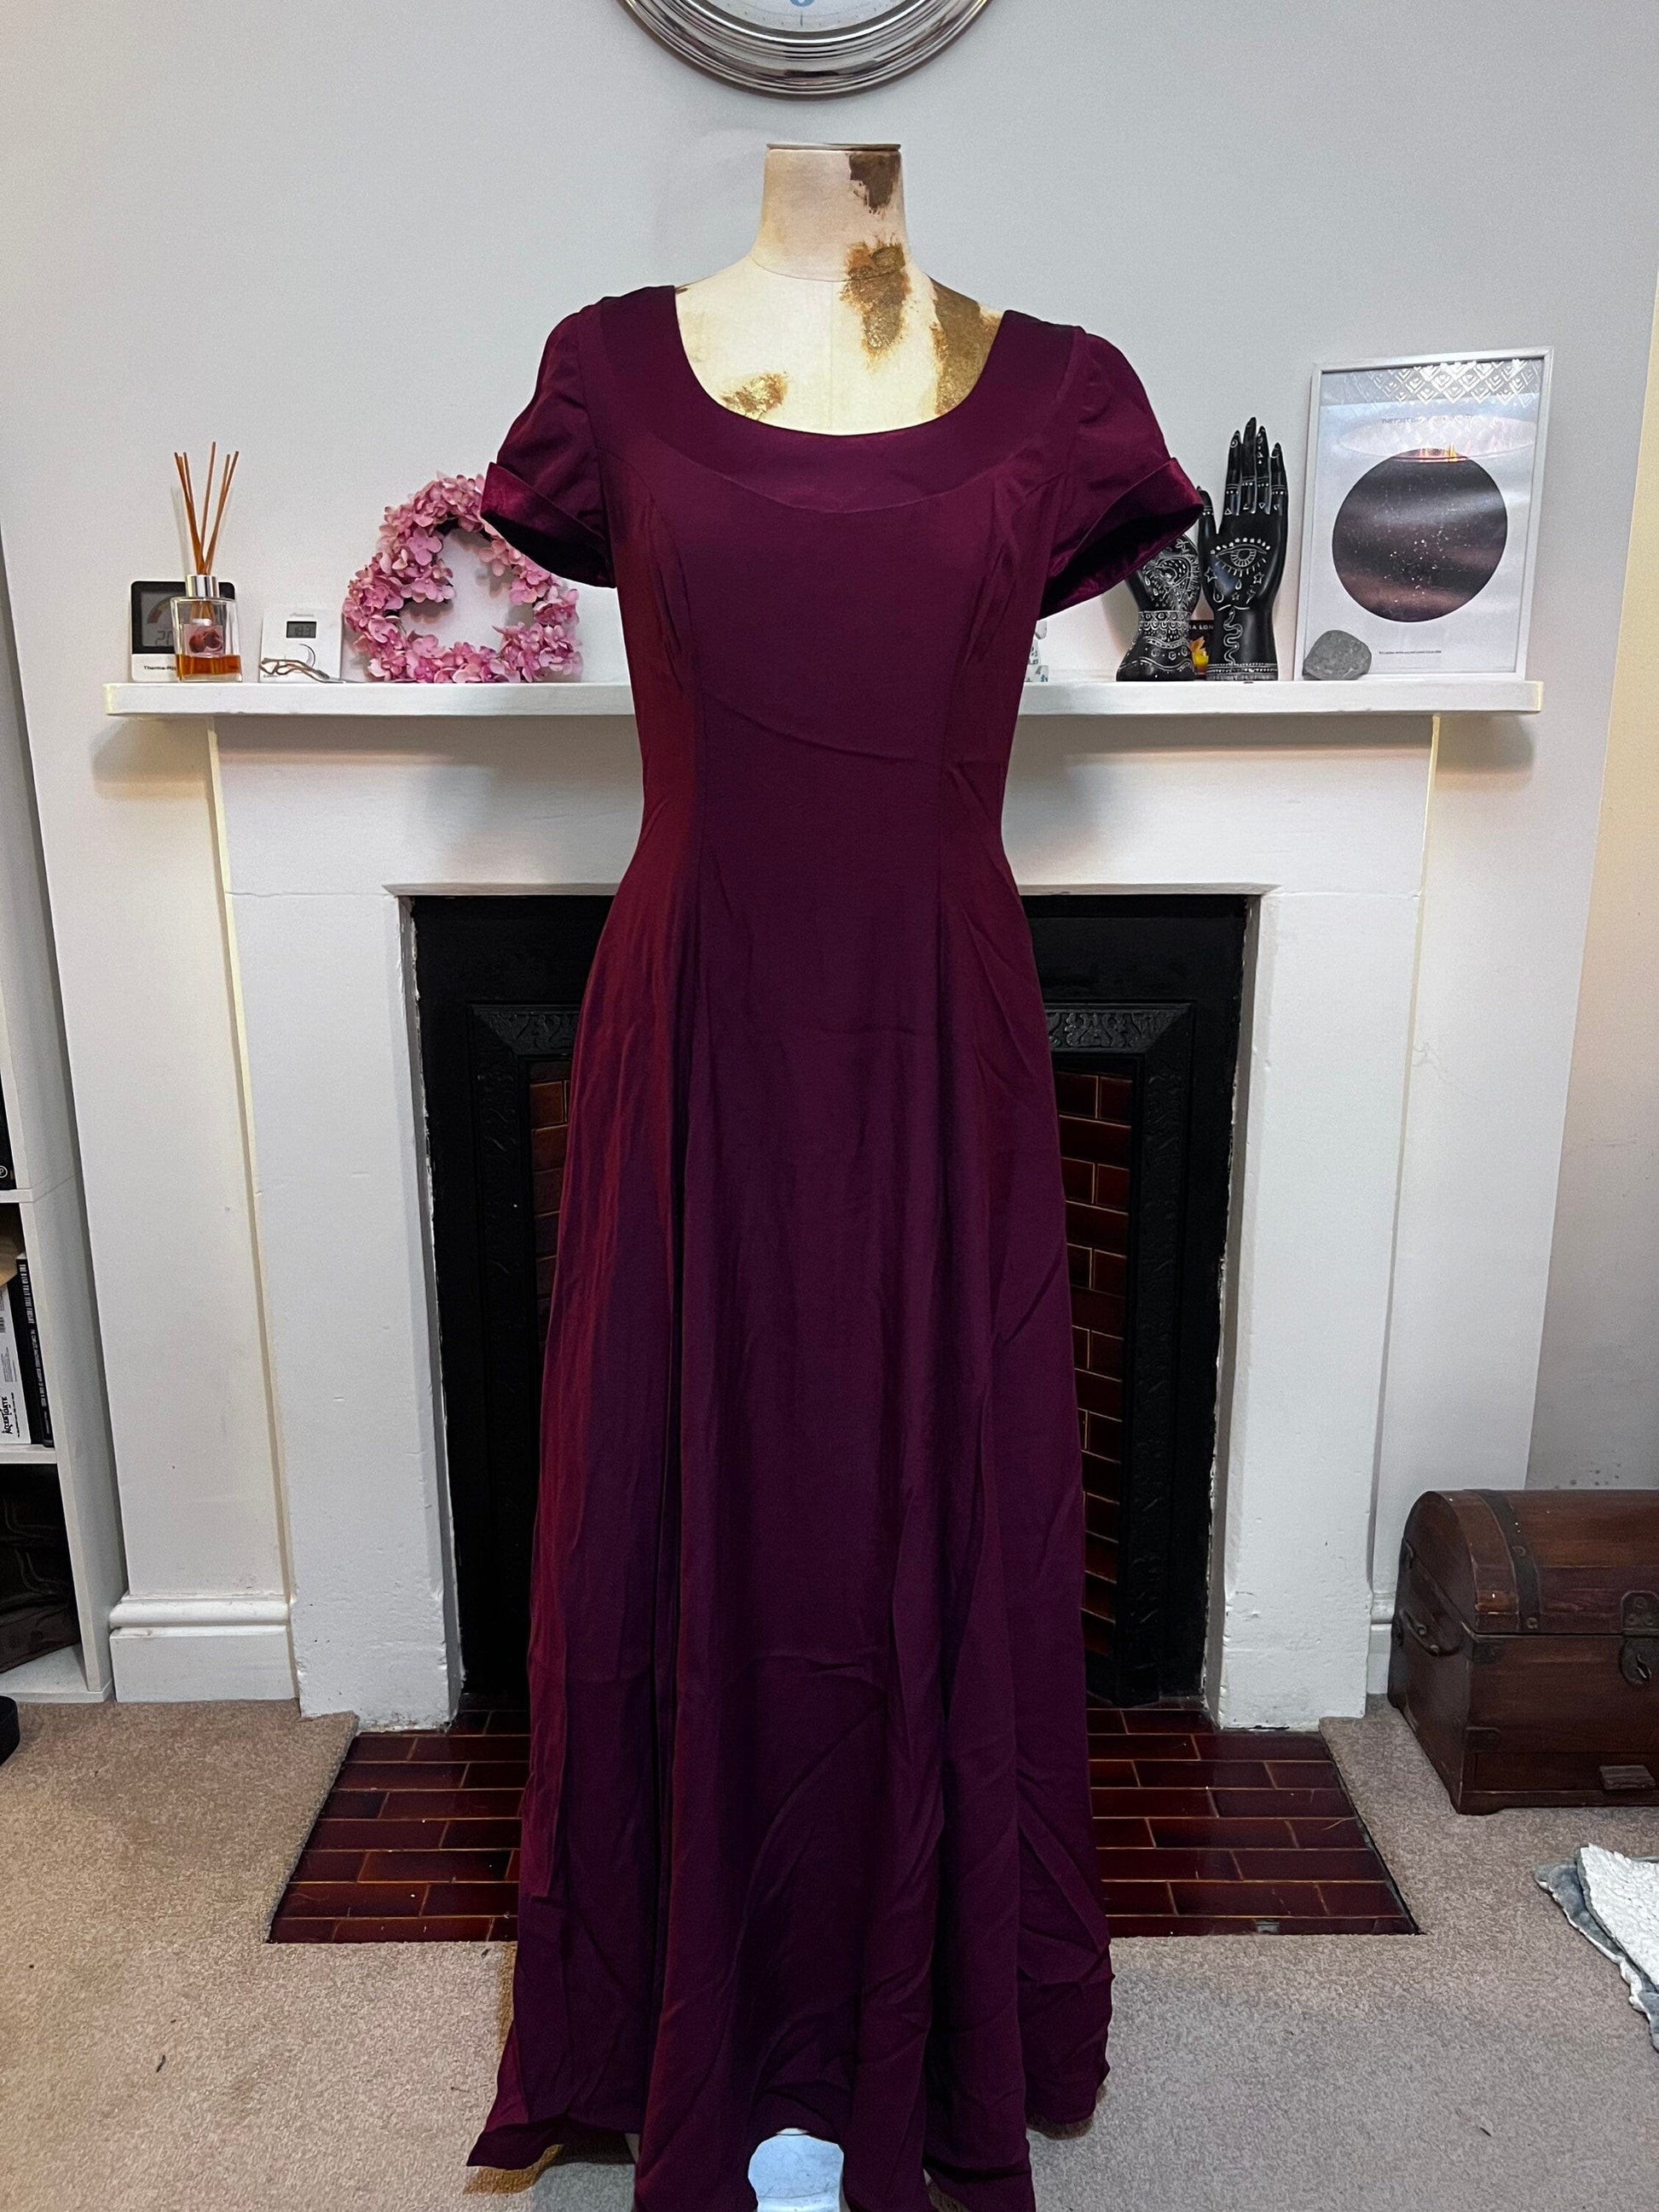 Vintage Burgundy Deep Wine Prom Dress Max Full Length UK Size 8-10